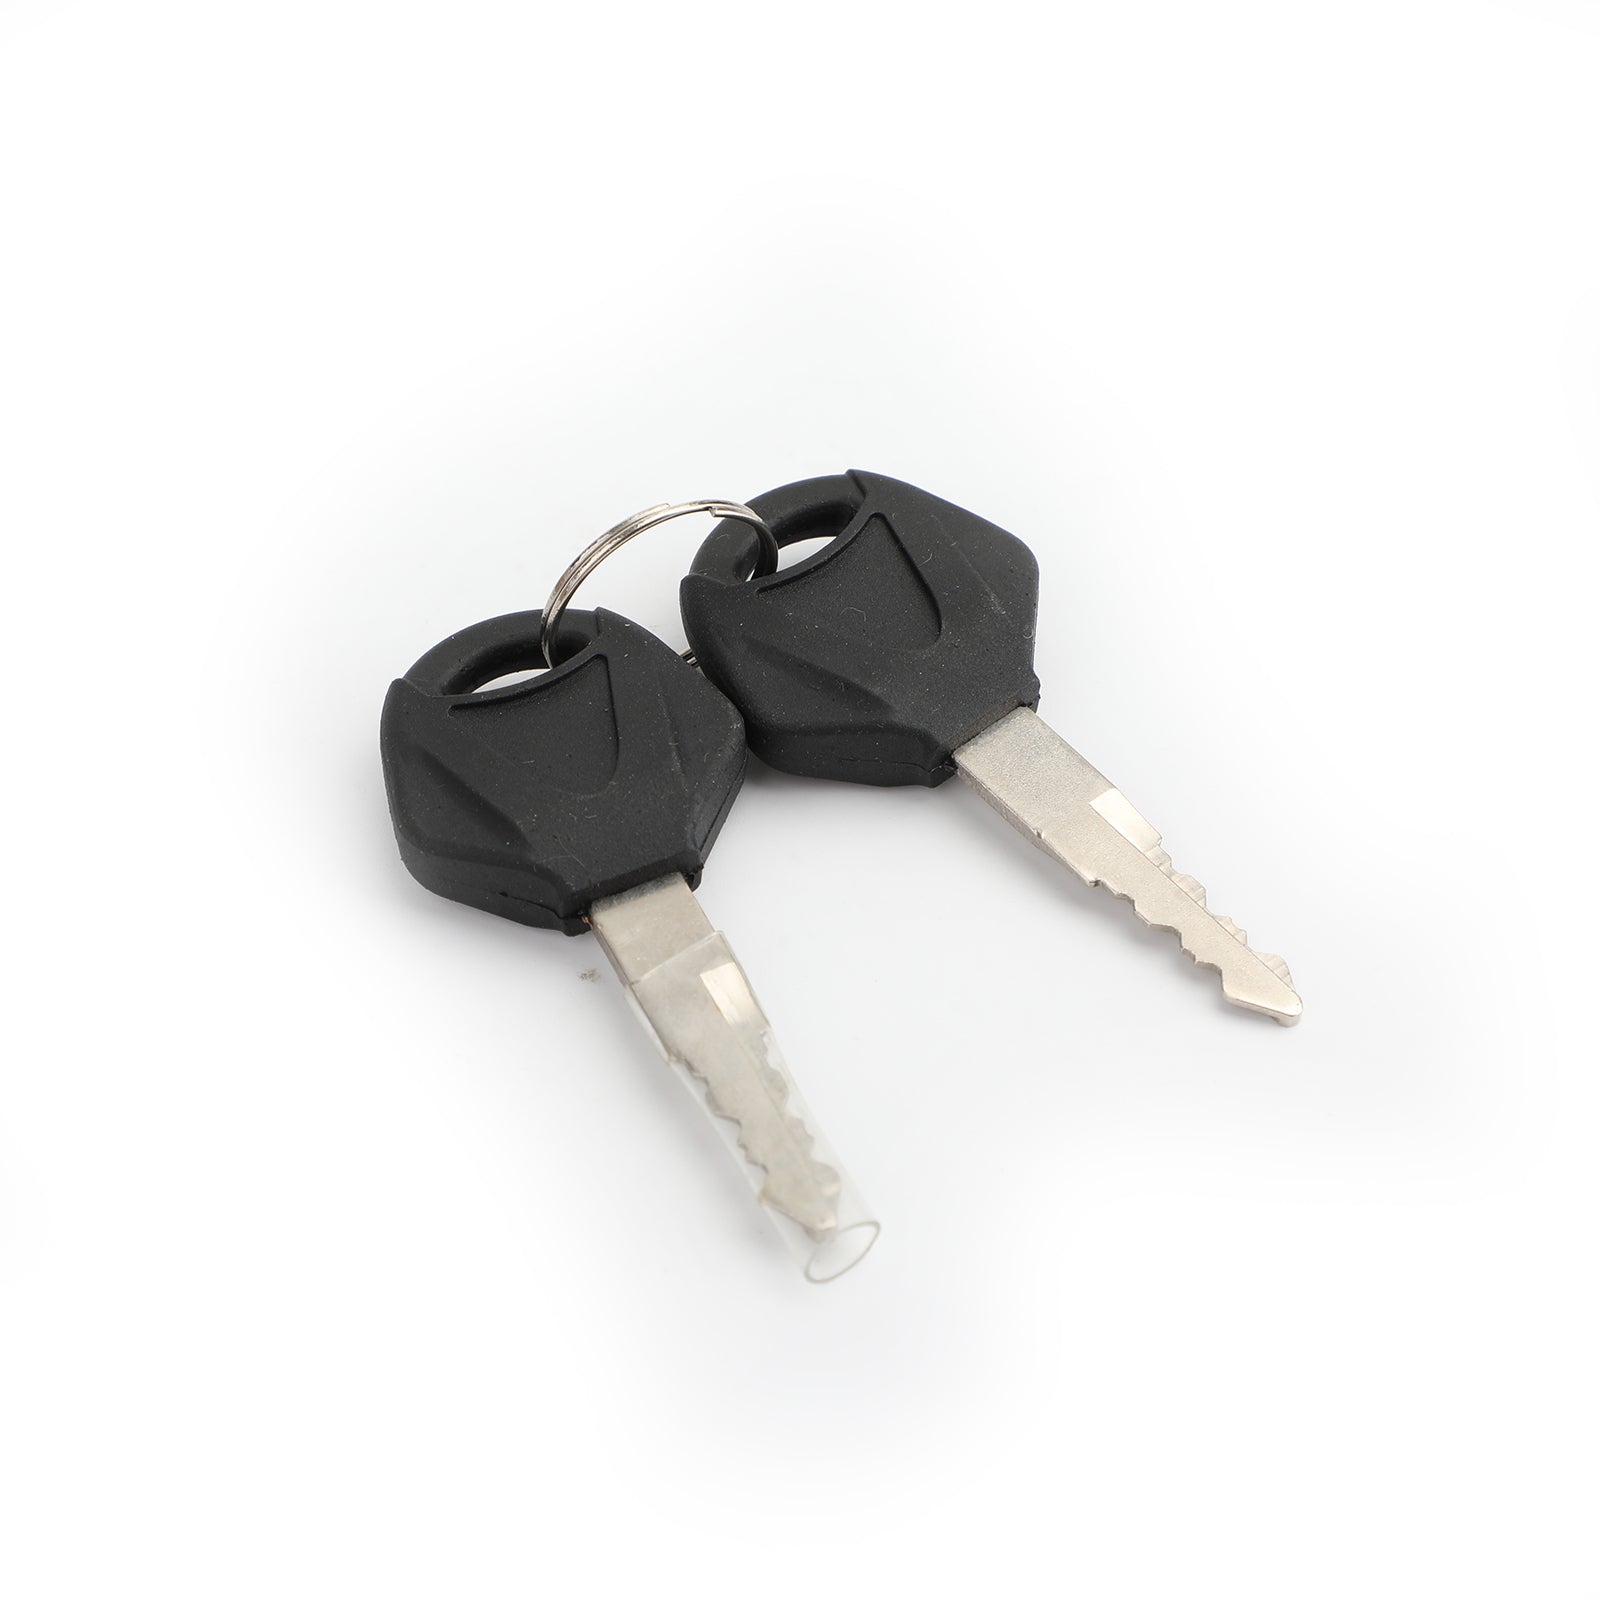 Ignition Switch Fuel Gas Cap Seat Lock Keys For Suzuki V-Strom 650/1000 DL 02-12